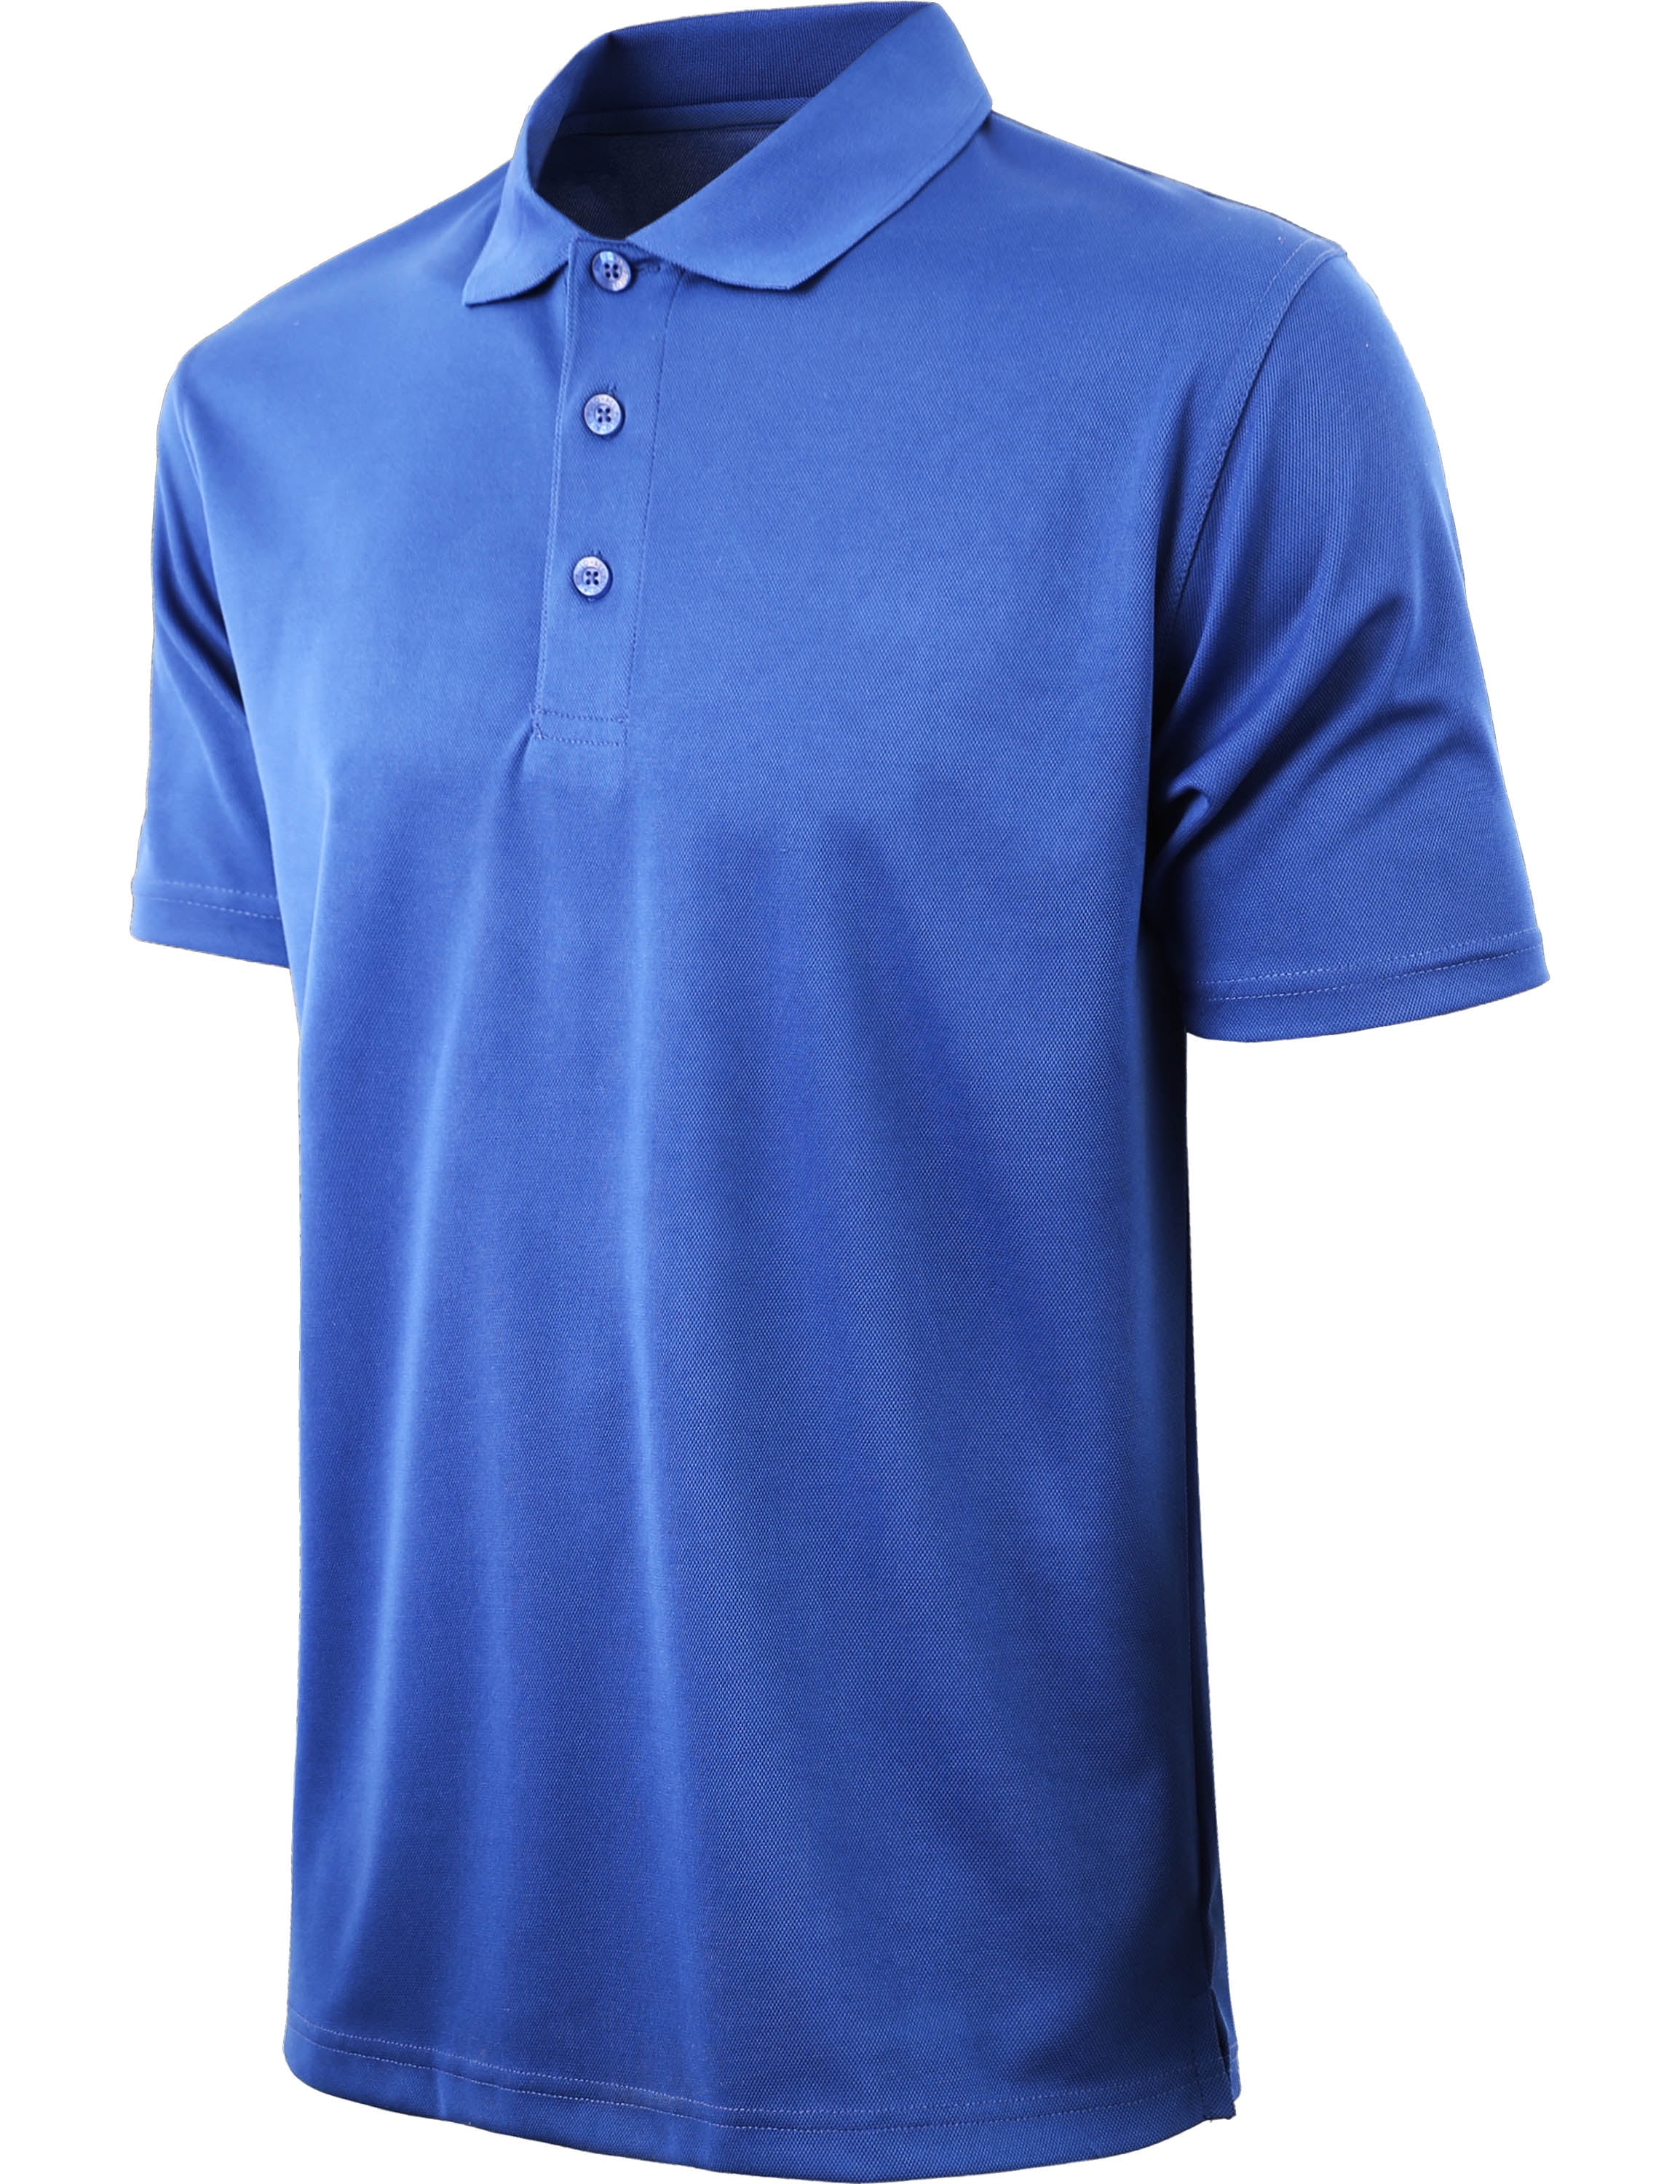 Men's Active Dry Comfort Polo Golf Jersey Casual Shirt - Walmart.com